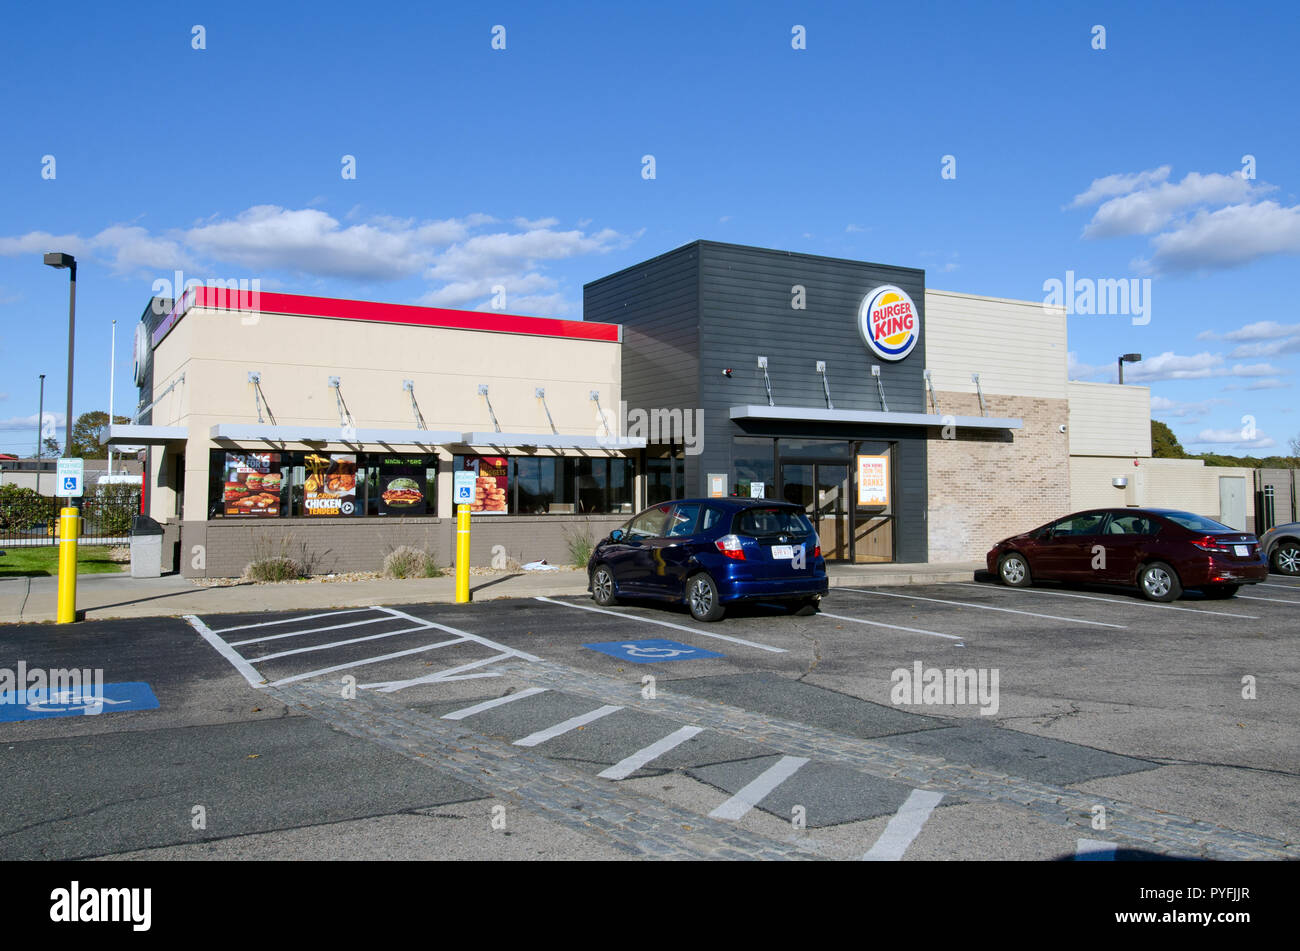 Franquicia de comida rápida Burger King restaurante exterior en Falmouth, Cape Cod Massachusetts EE.UU. Foto de stock